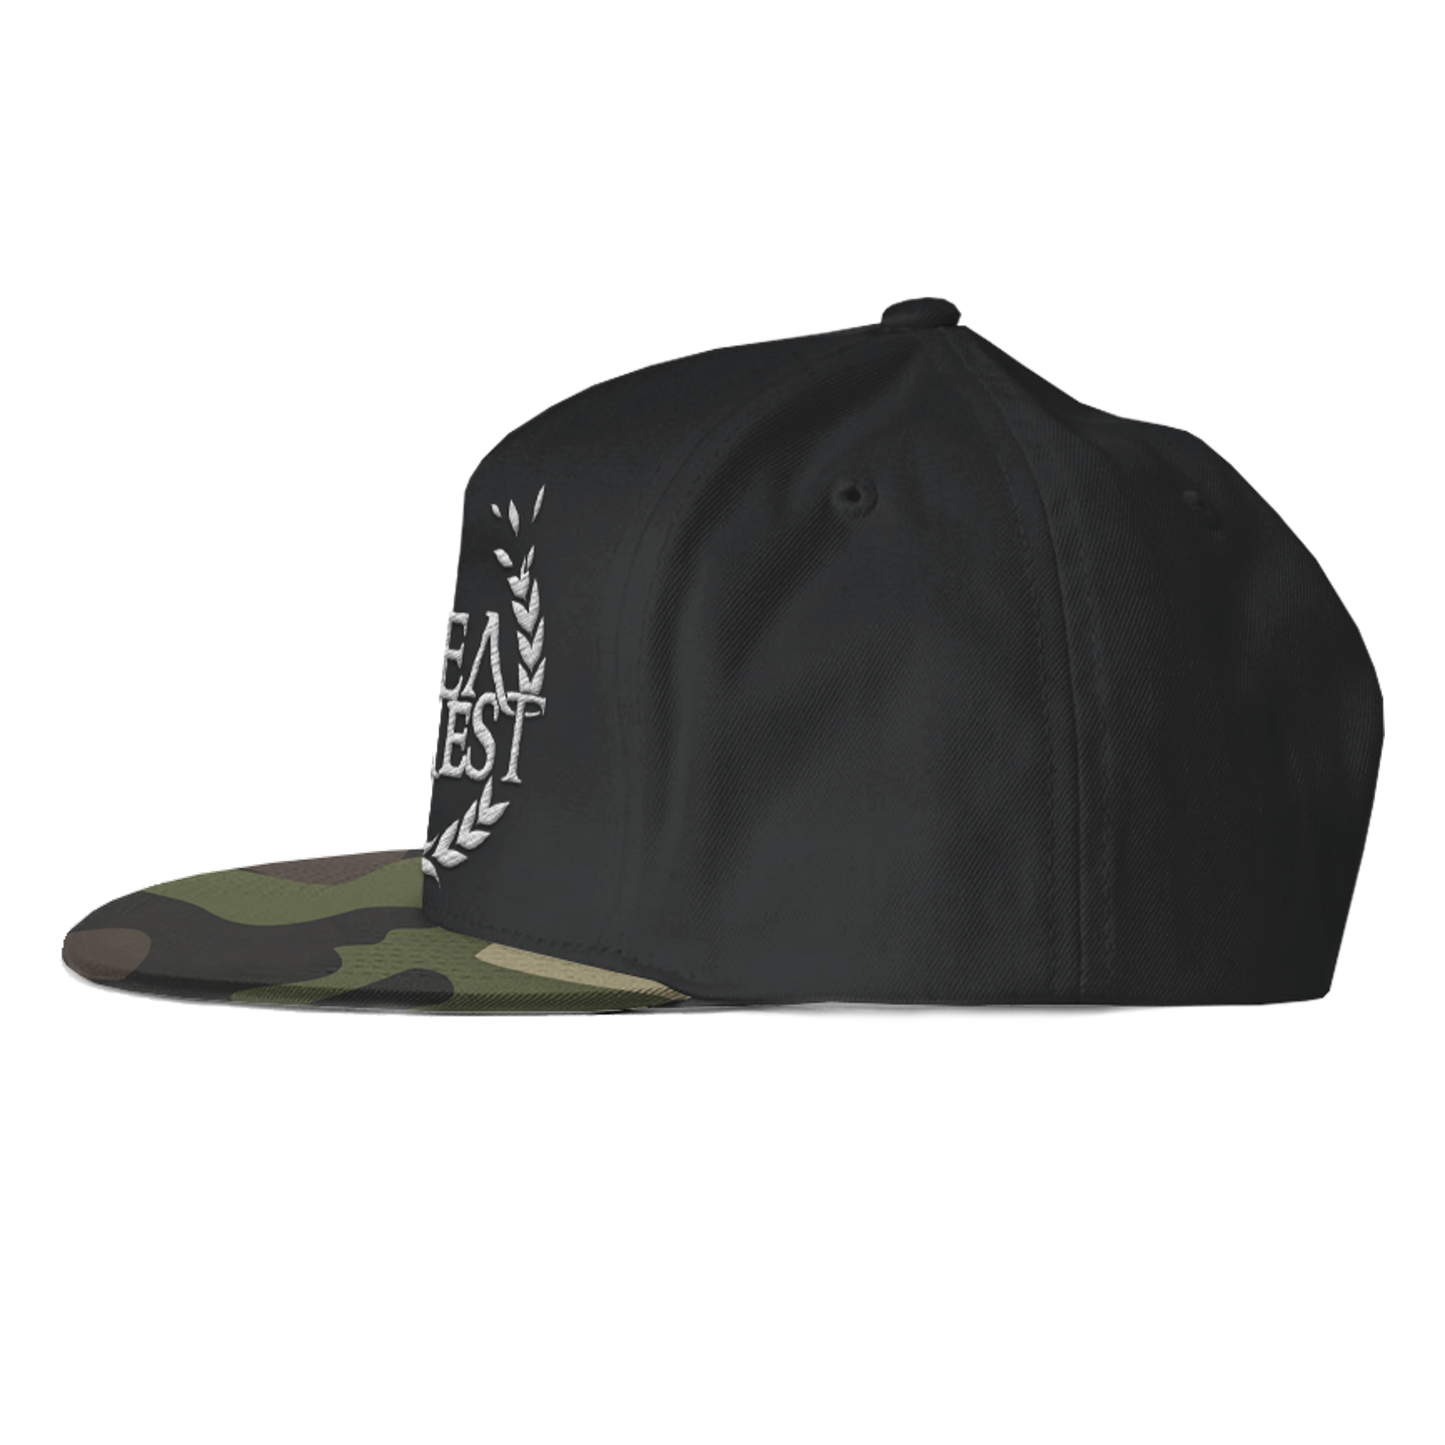 ALEA JACTA EST "Logo" Black Snapback Hat